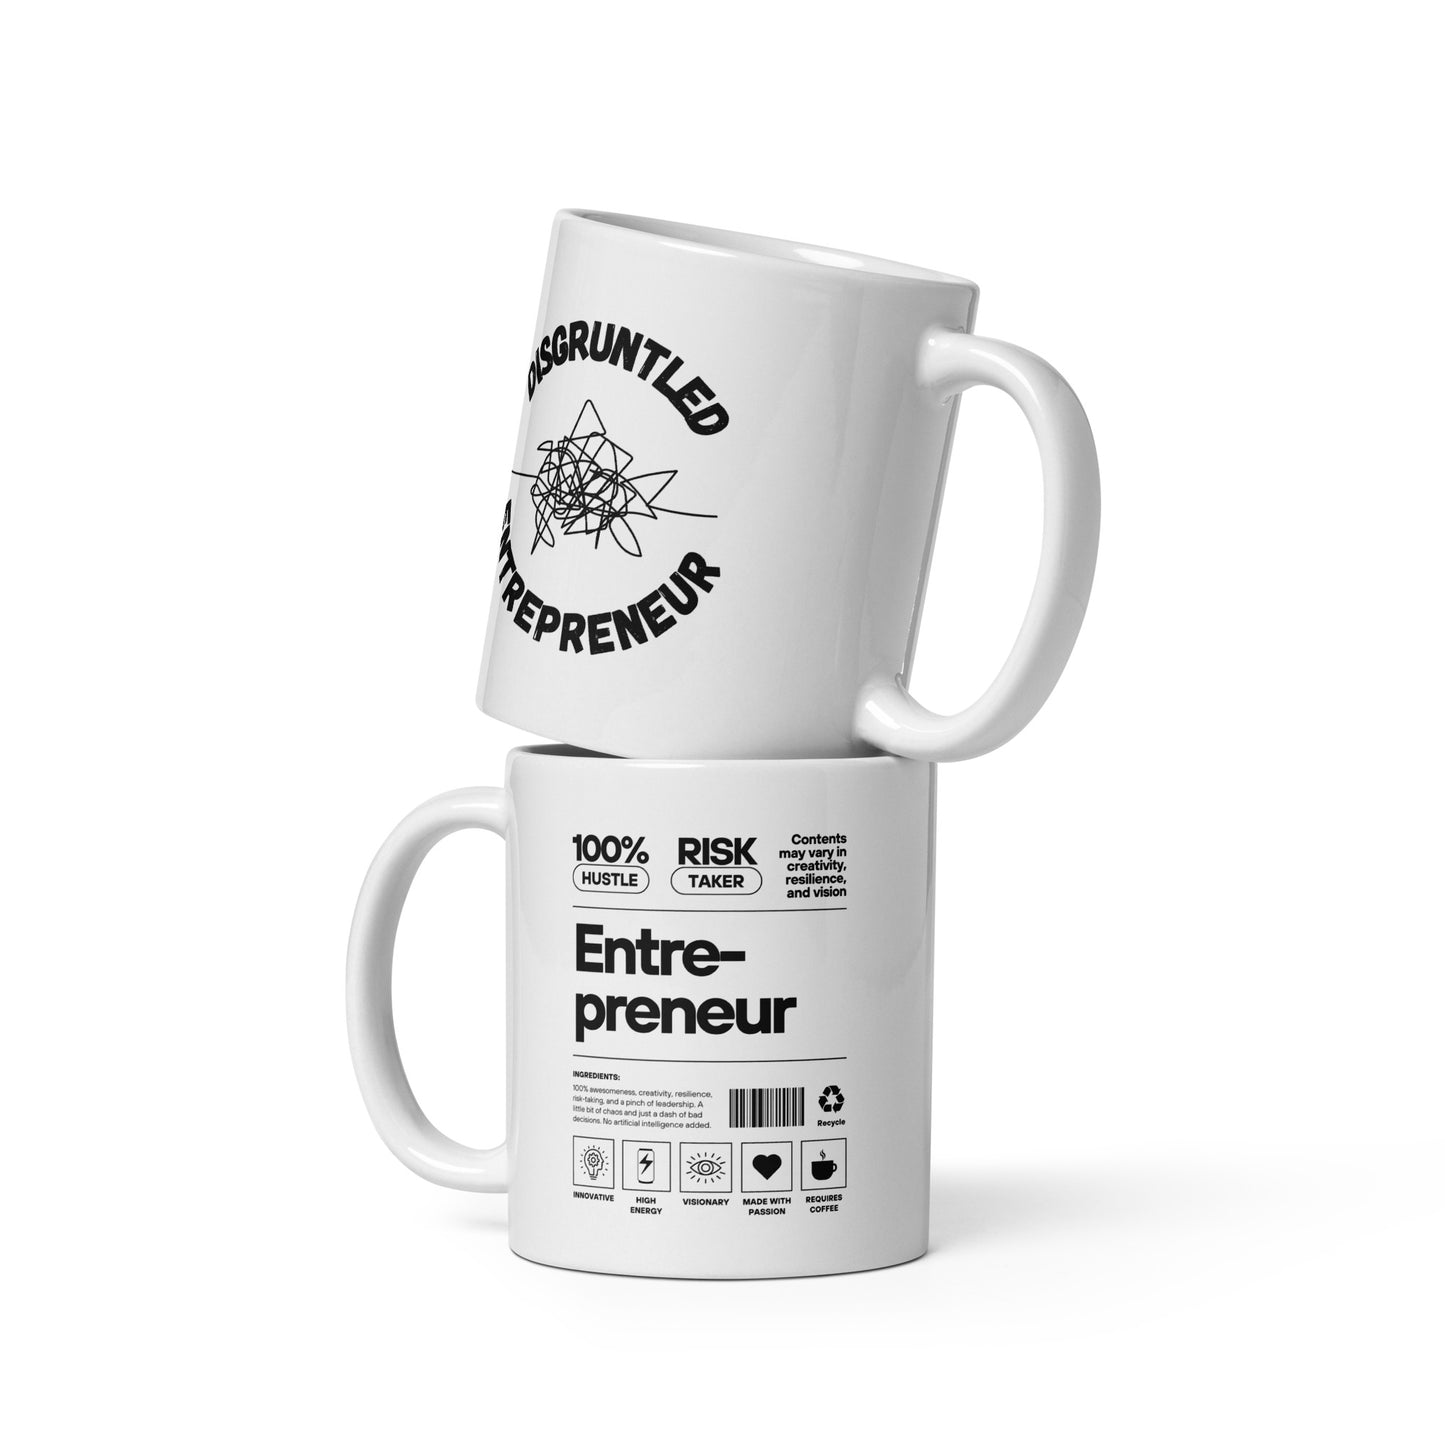 Entrepreneur Label Coffee Mug